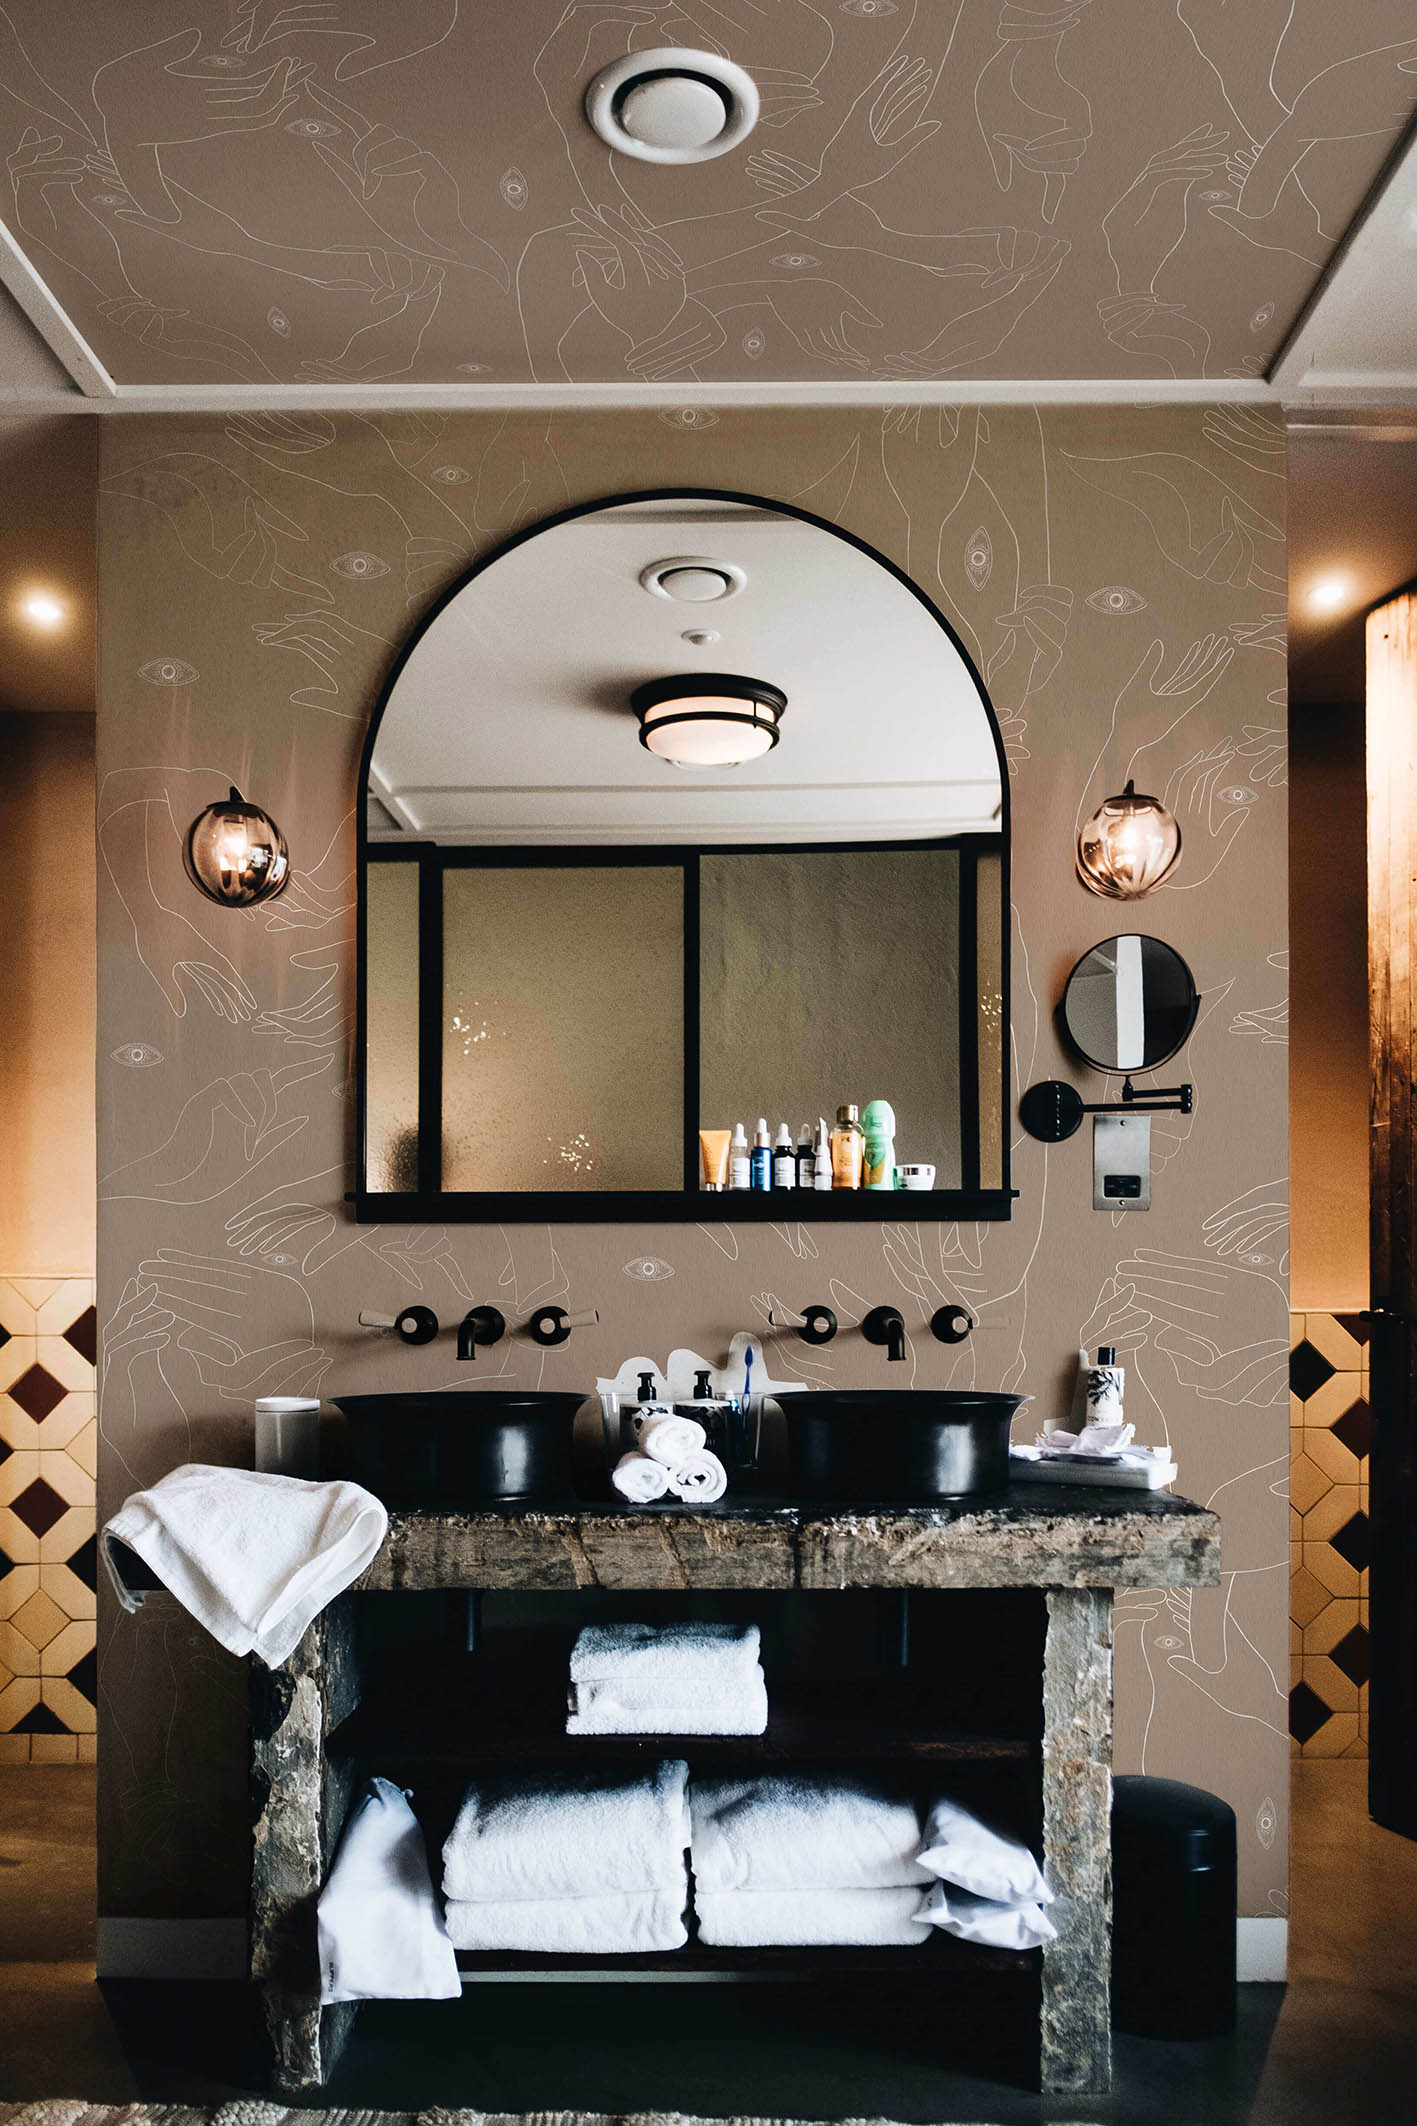 Uno-Nessuno-Beige-soft-MaVoix-wallpaper-collection-essential-bathroom